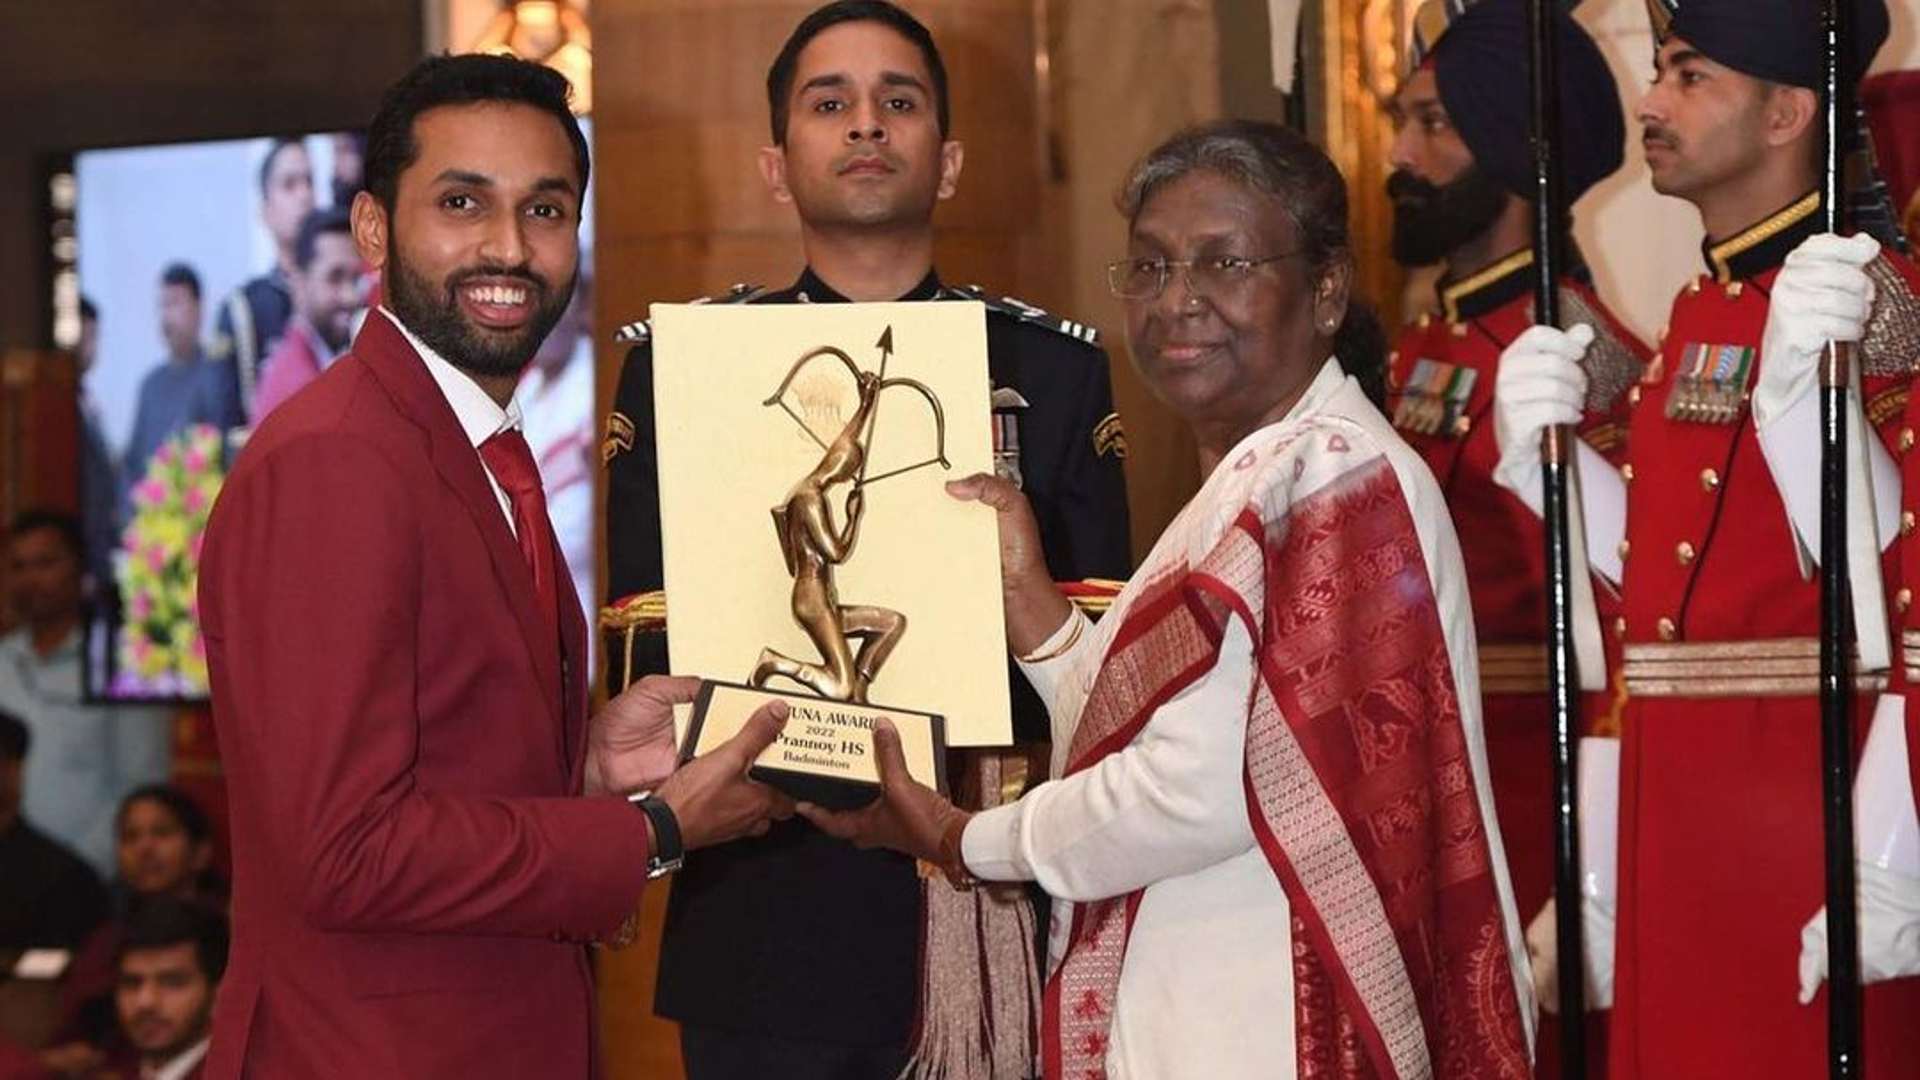 Prannoy receiving the Arjuna Award from the President of India, Droupadi Murmu (Image Credits - Instagram/ @prannoy_hs_)